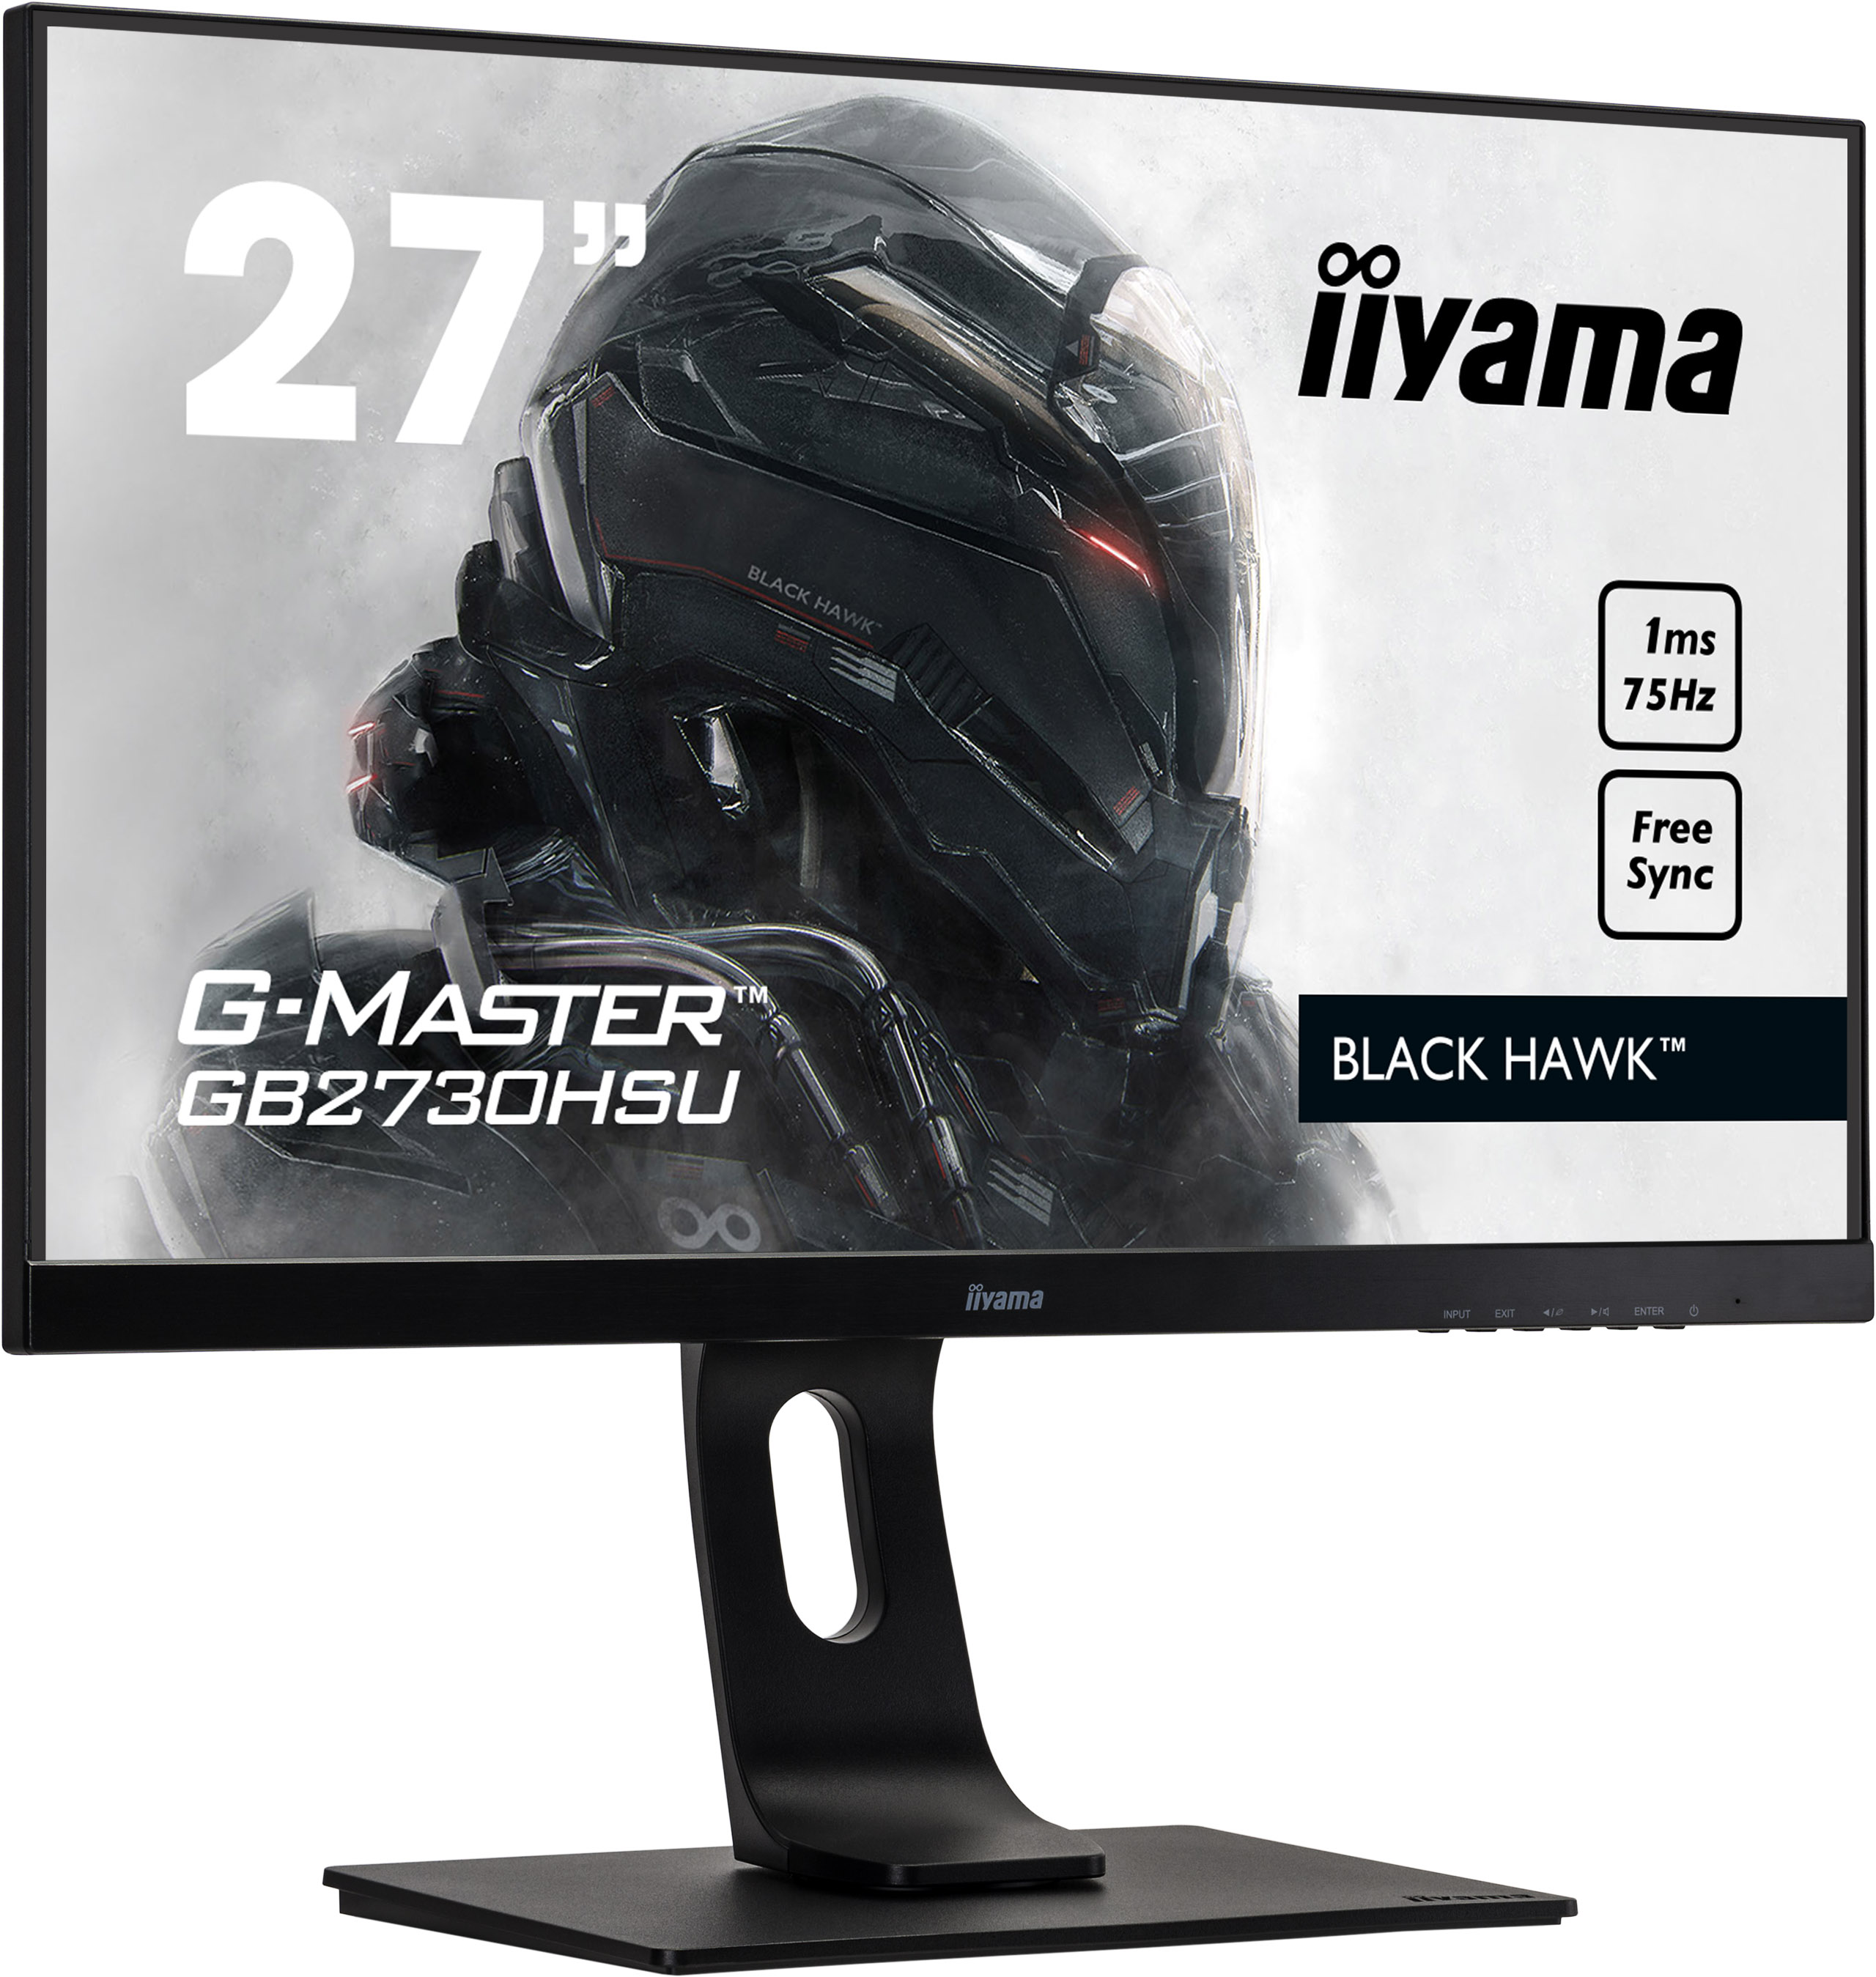 iiyama - G-Master GB2730HSU-B1 Black Hawk – get in the game